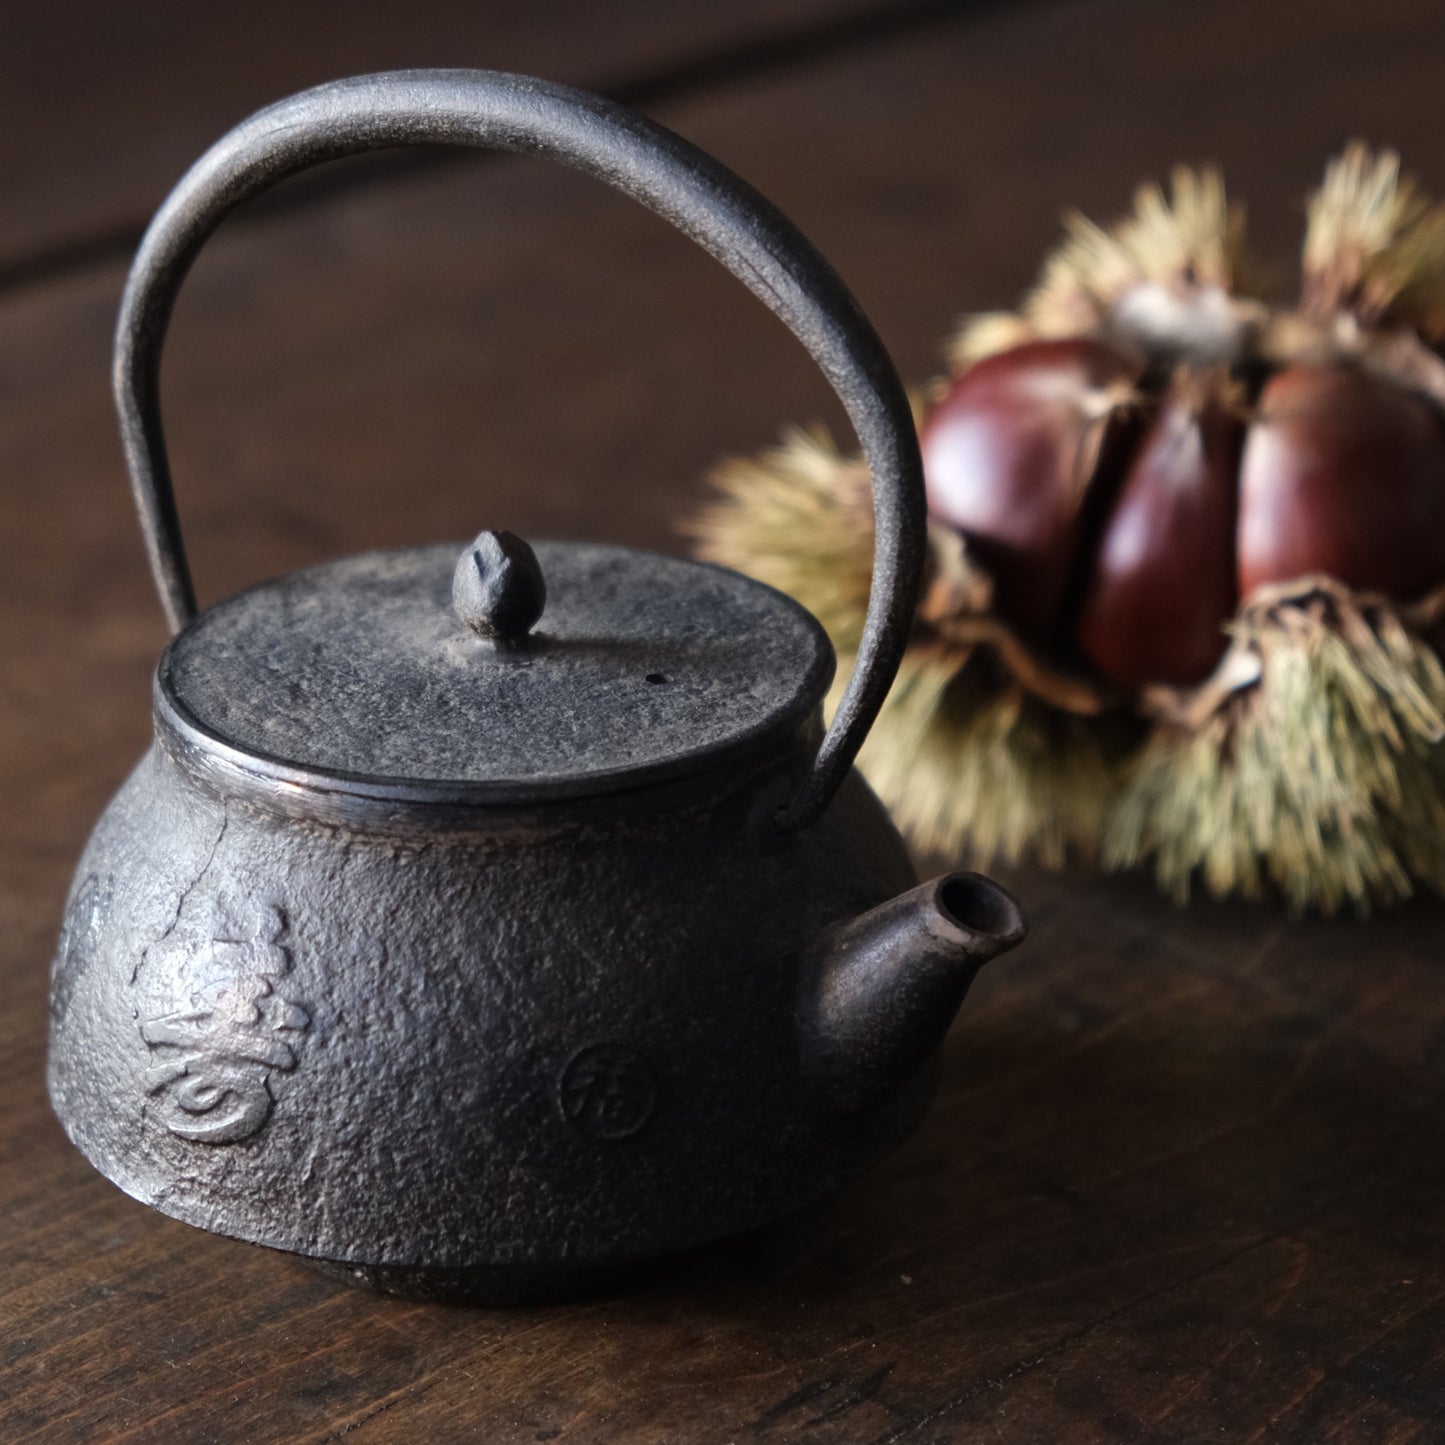 Vintage Japanese Tetsubin iron kettle small size (kotobuki)